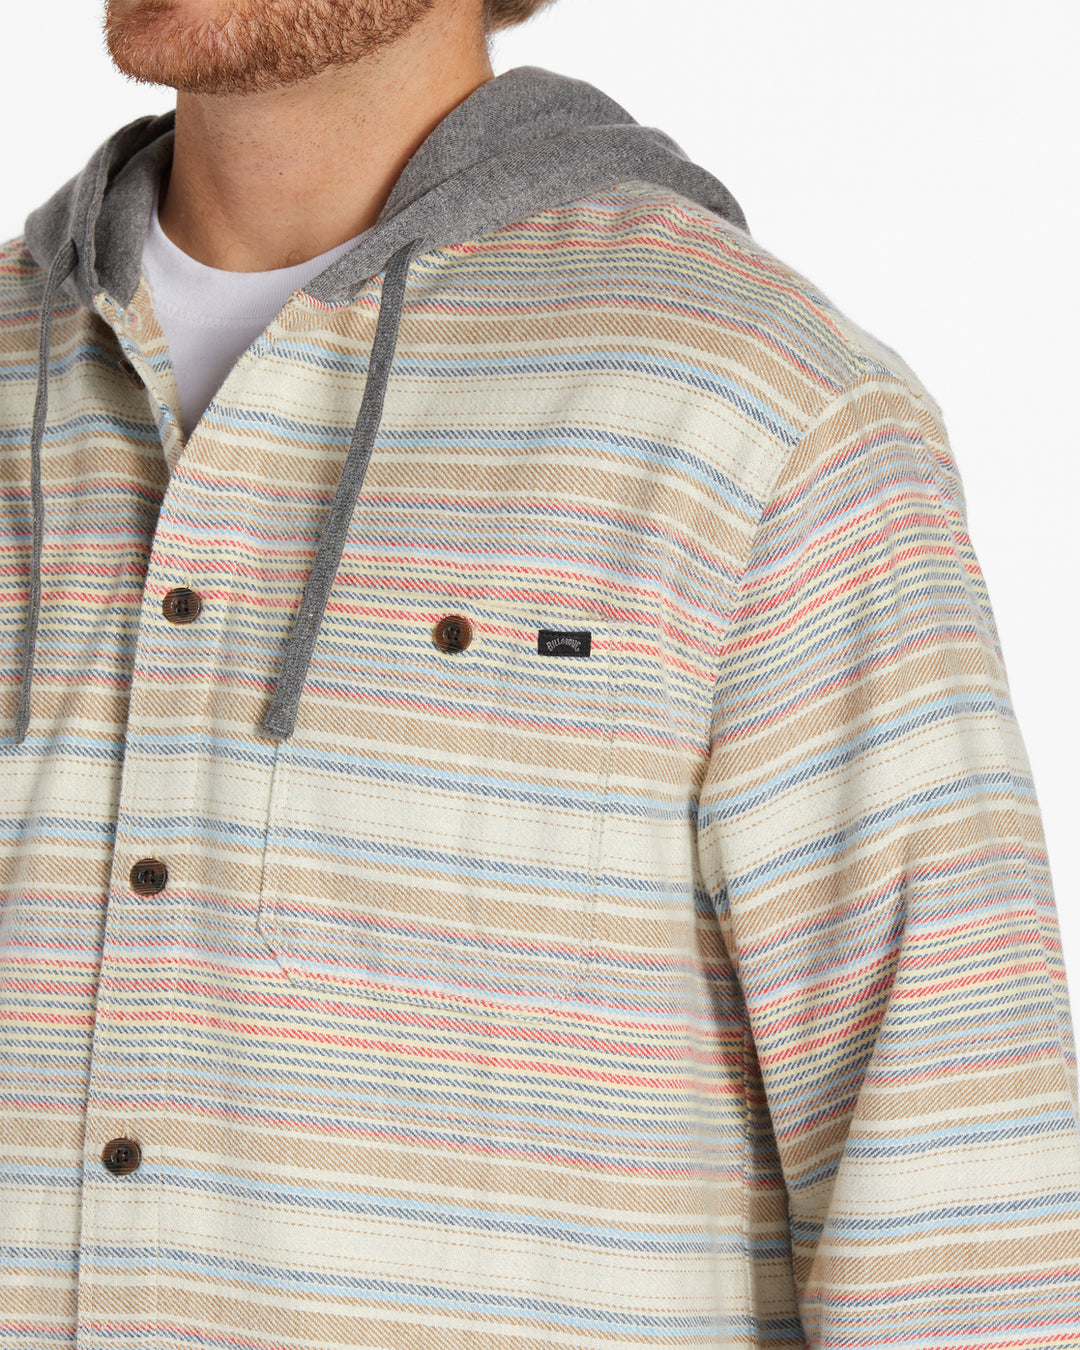 Billabong Baja Hooded Flannel Shirt - Oyster - Sun Diego Boardshop